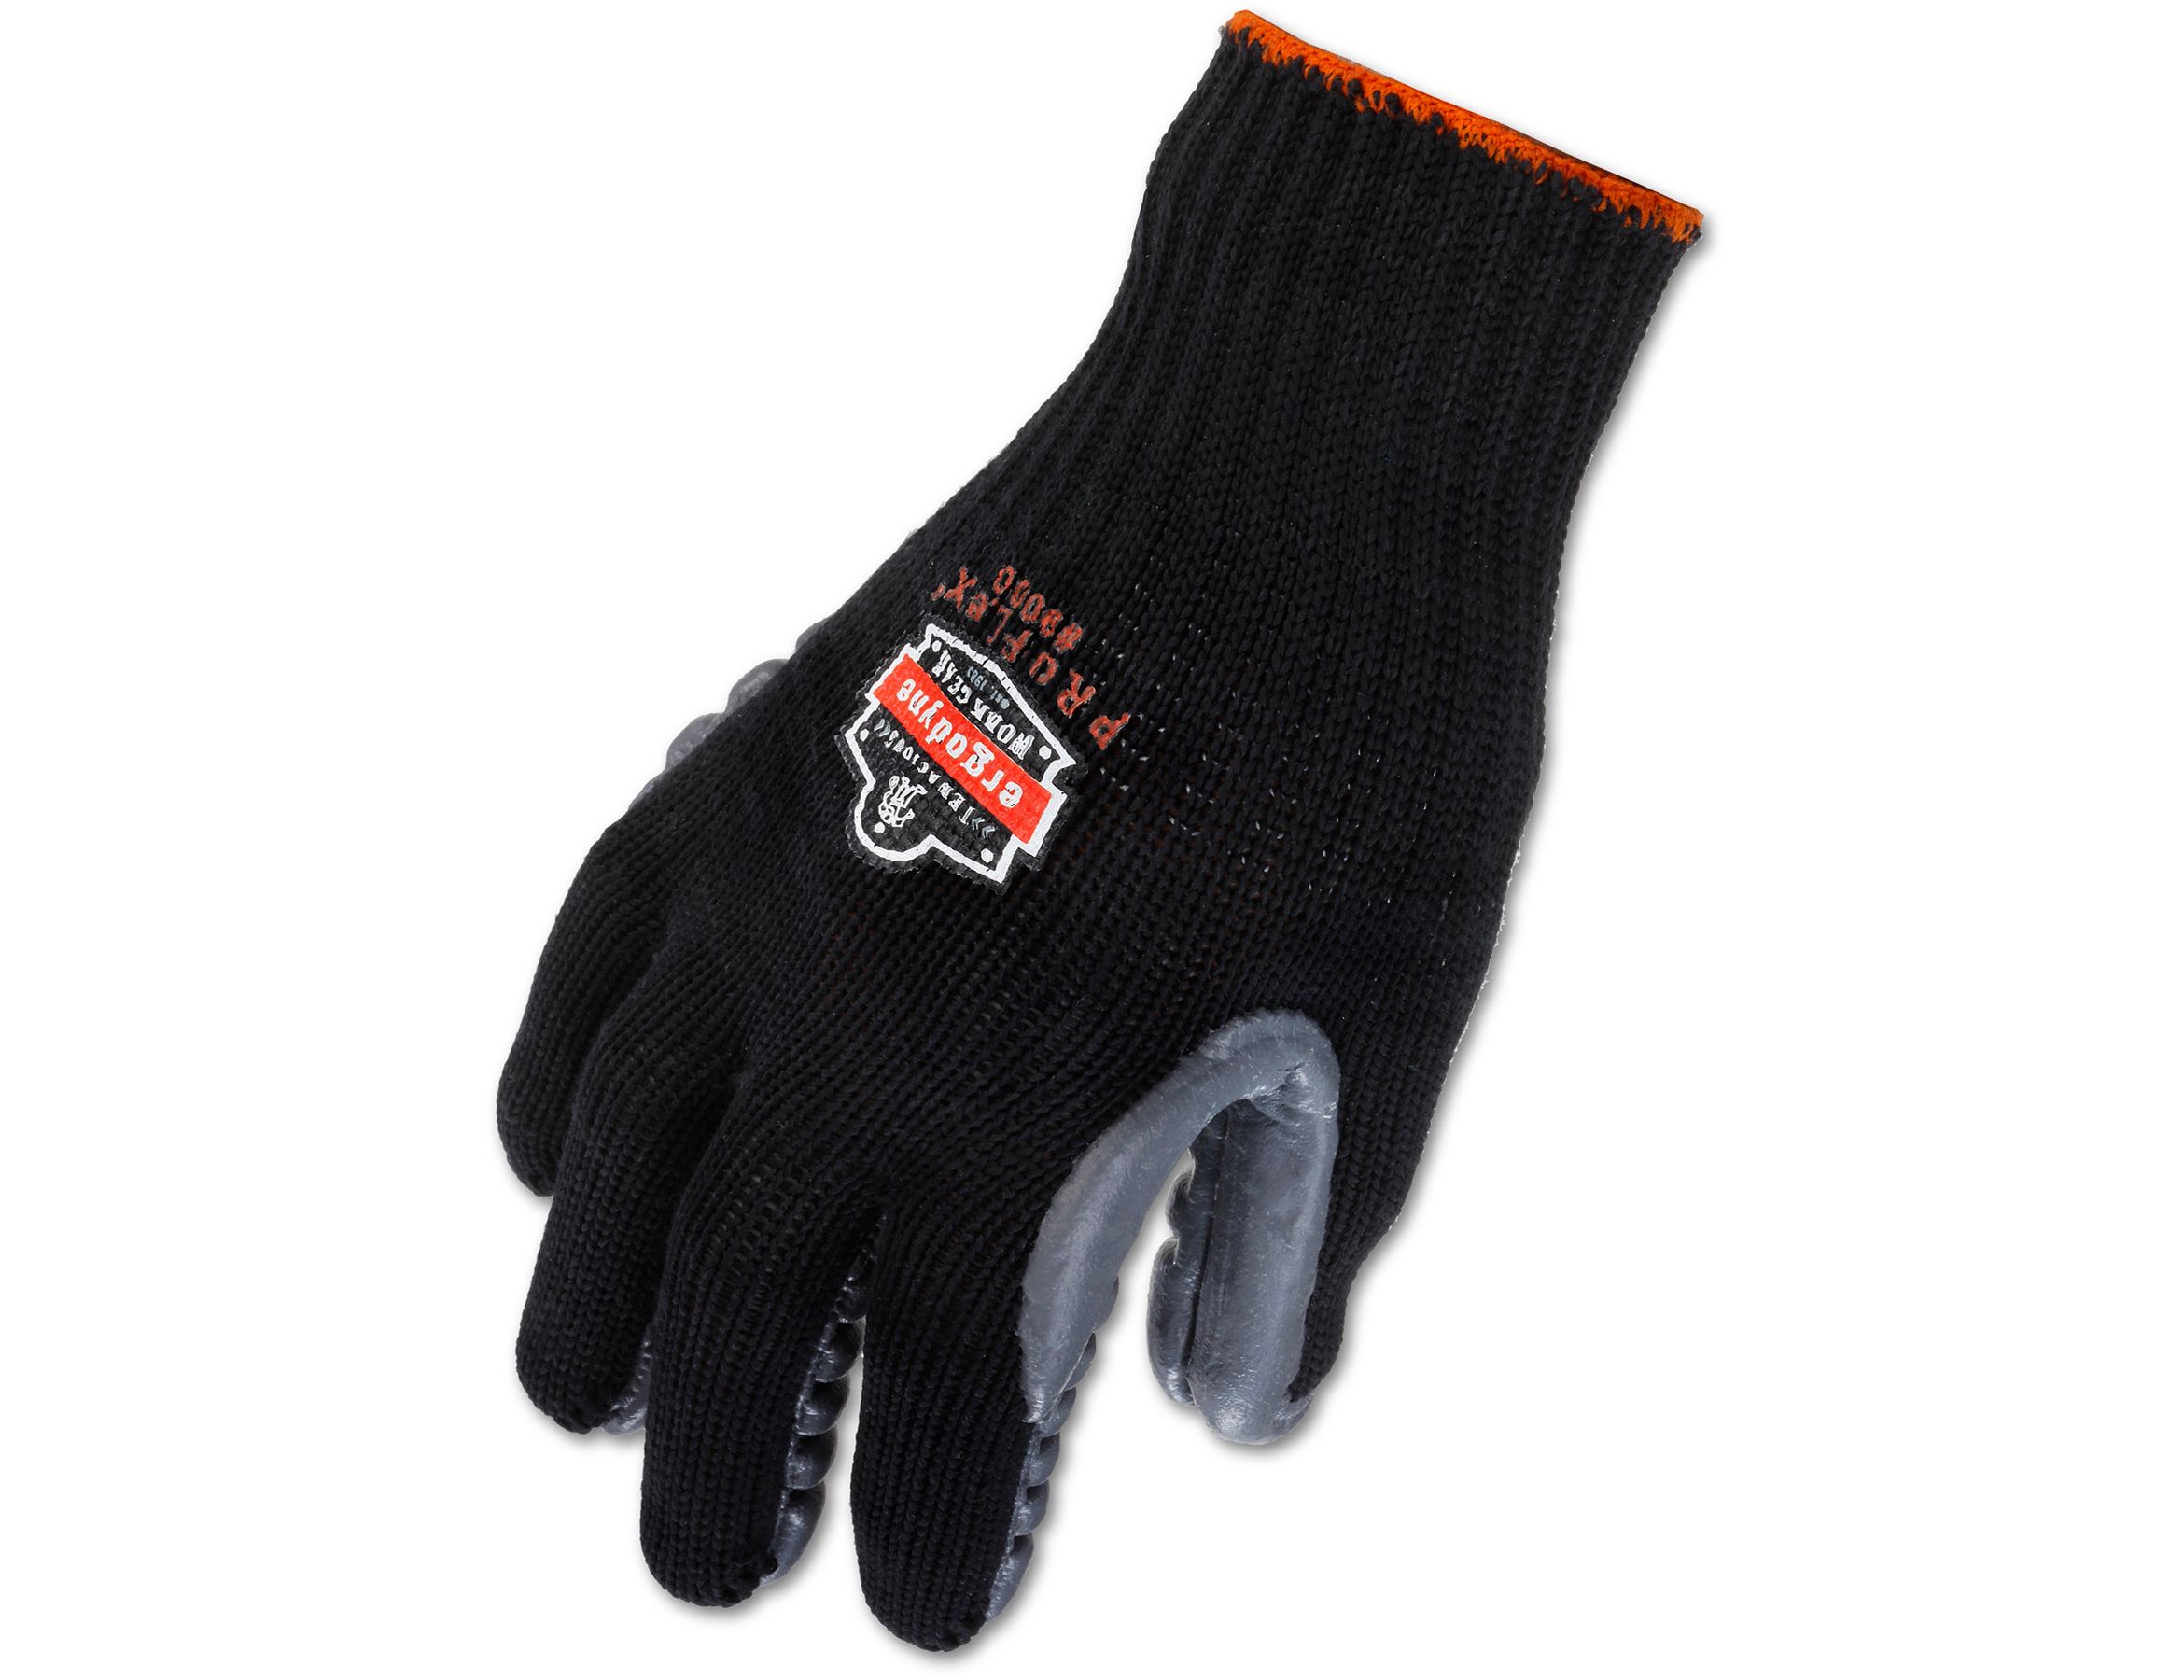 Shop Anti-Vibration Gloves - Shop Performance Gloves - Gloves  Hand  Protection